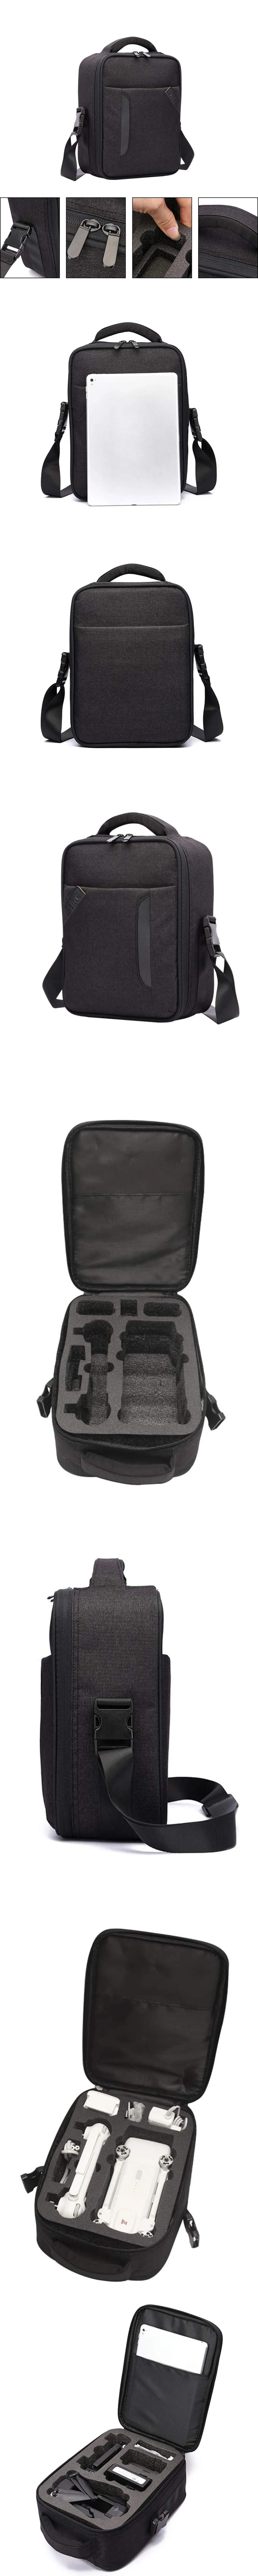 Сумка на плечо, рюкзак для Xiaomi FIMI X8 SE, аксессуары для квадрокоптера, противоударный чехол на плечо, сумка для хранения